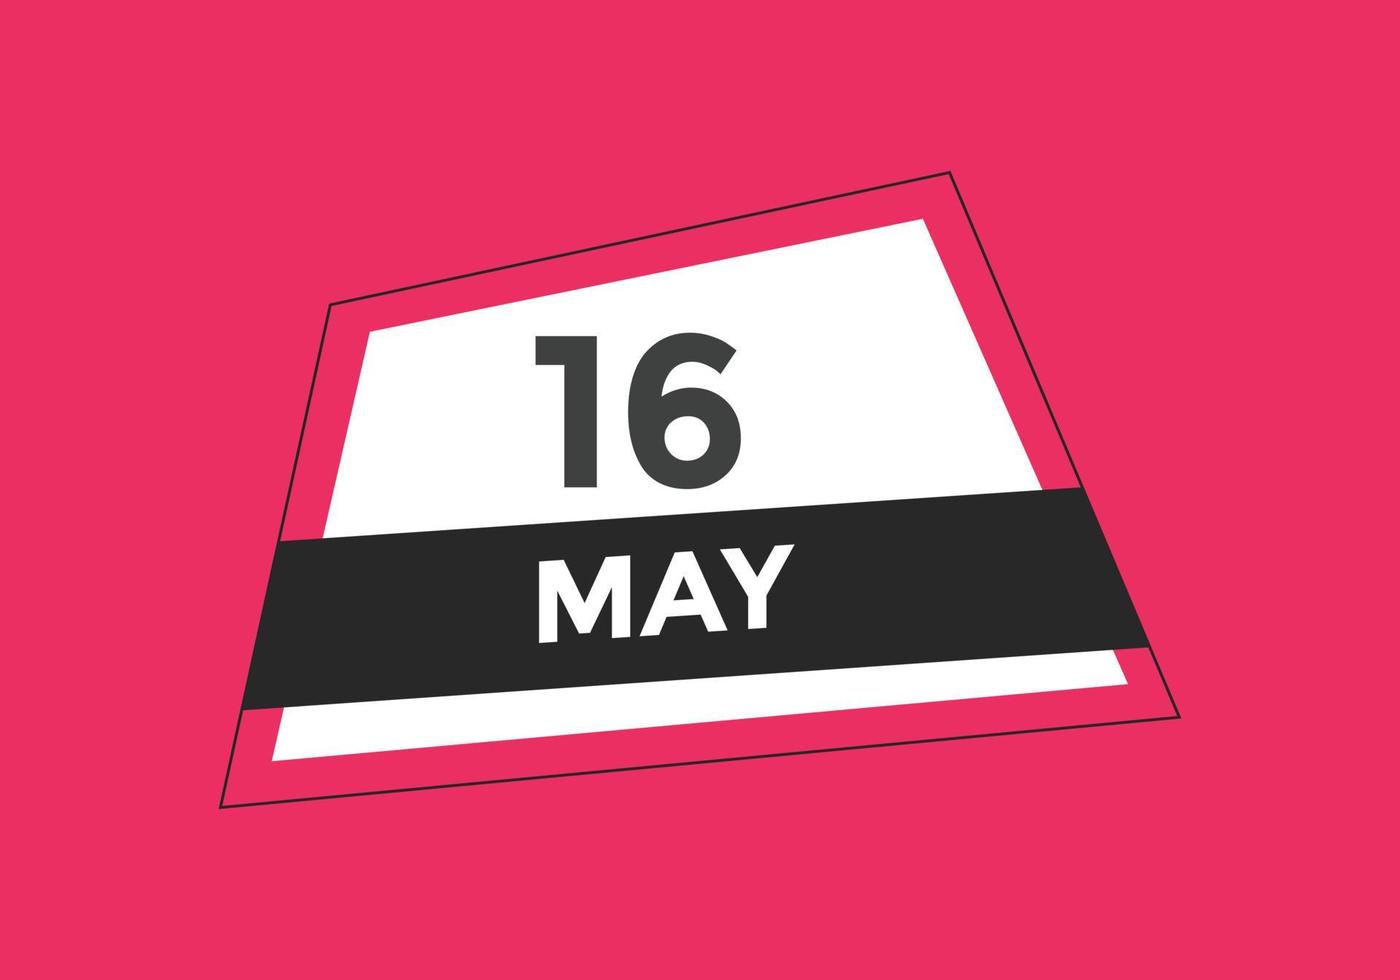 16. Mai Kalendererinnerung. 16. mai tägliche kalendersymbolvorlage. Kalender 16. Mai Icon-Design-Vorlage. Vektor-Illustration vektor